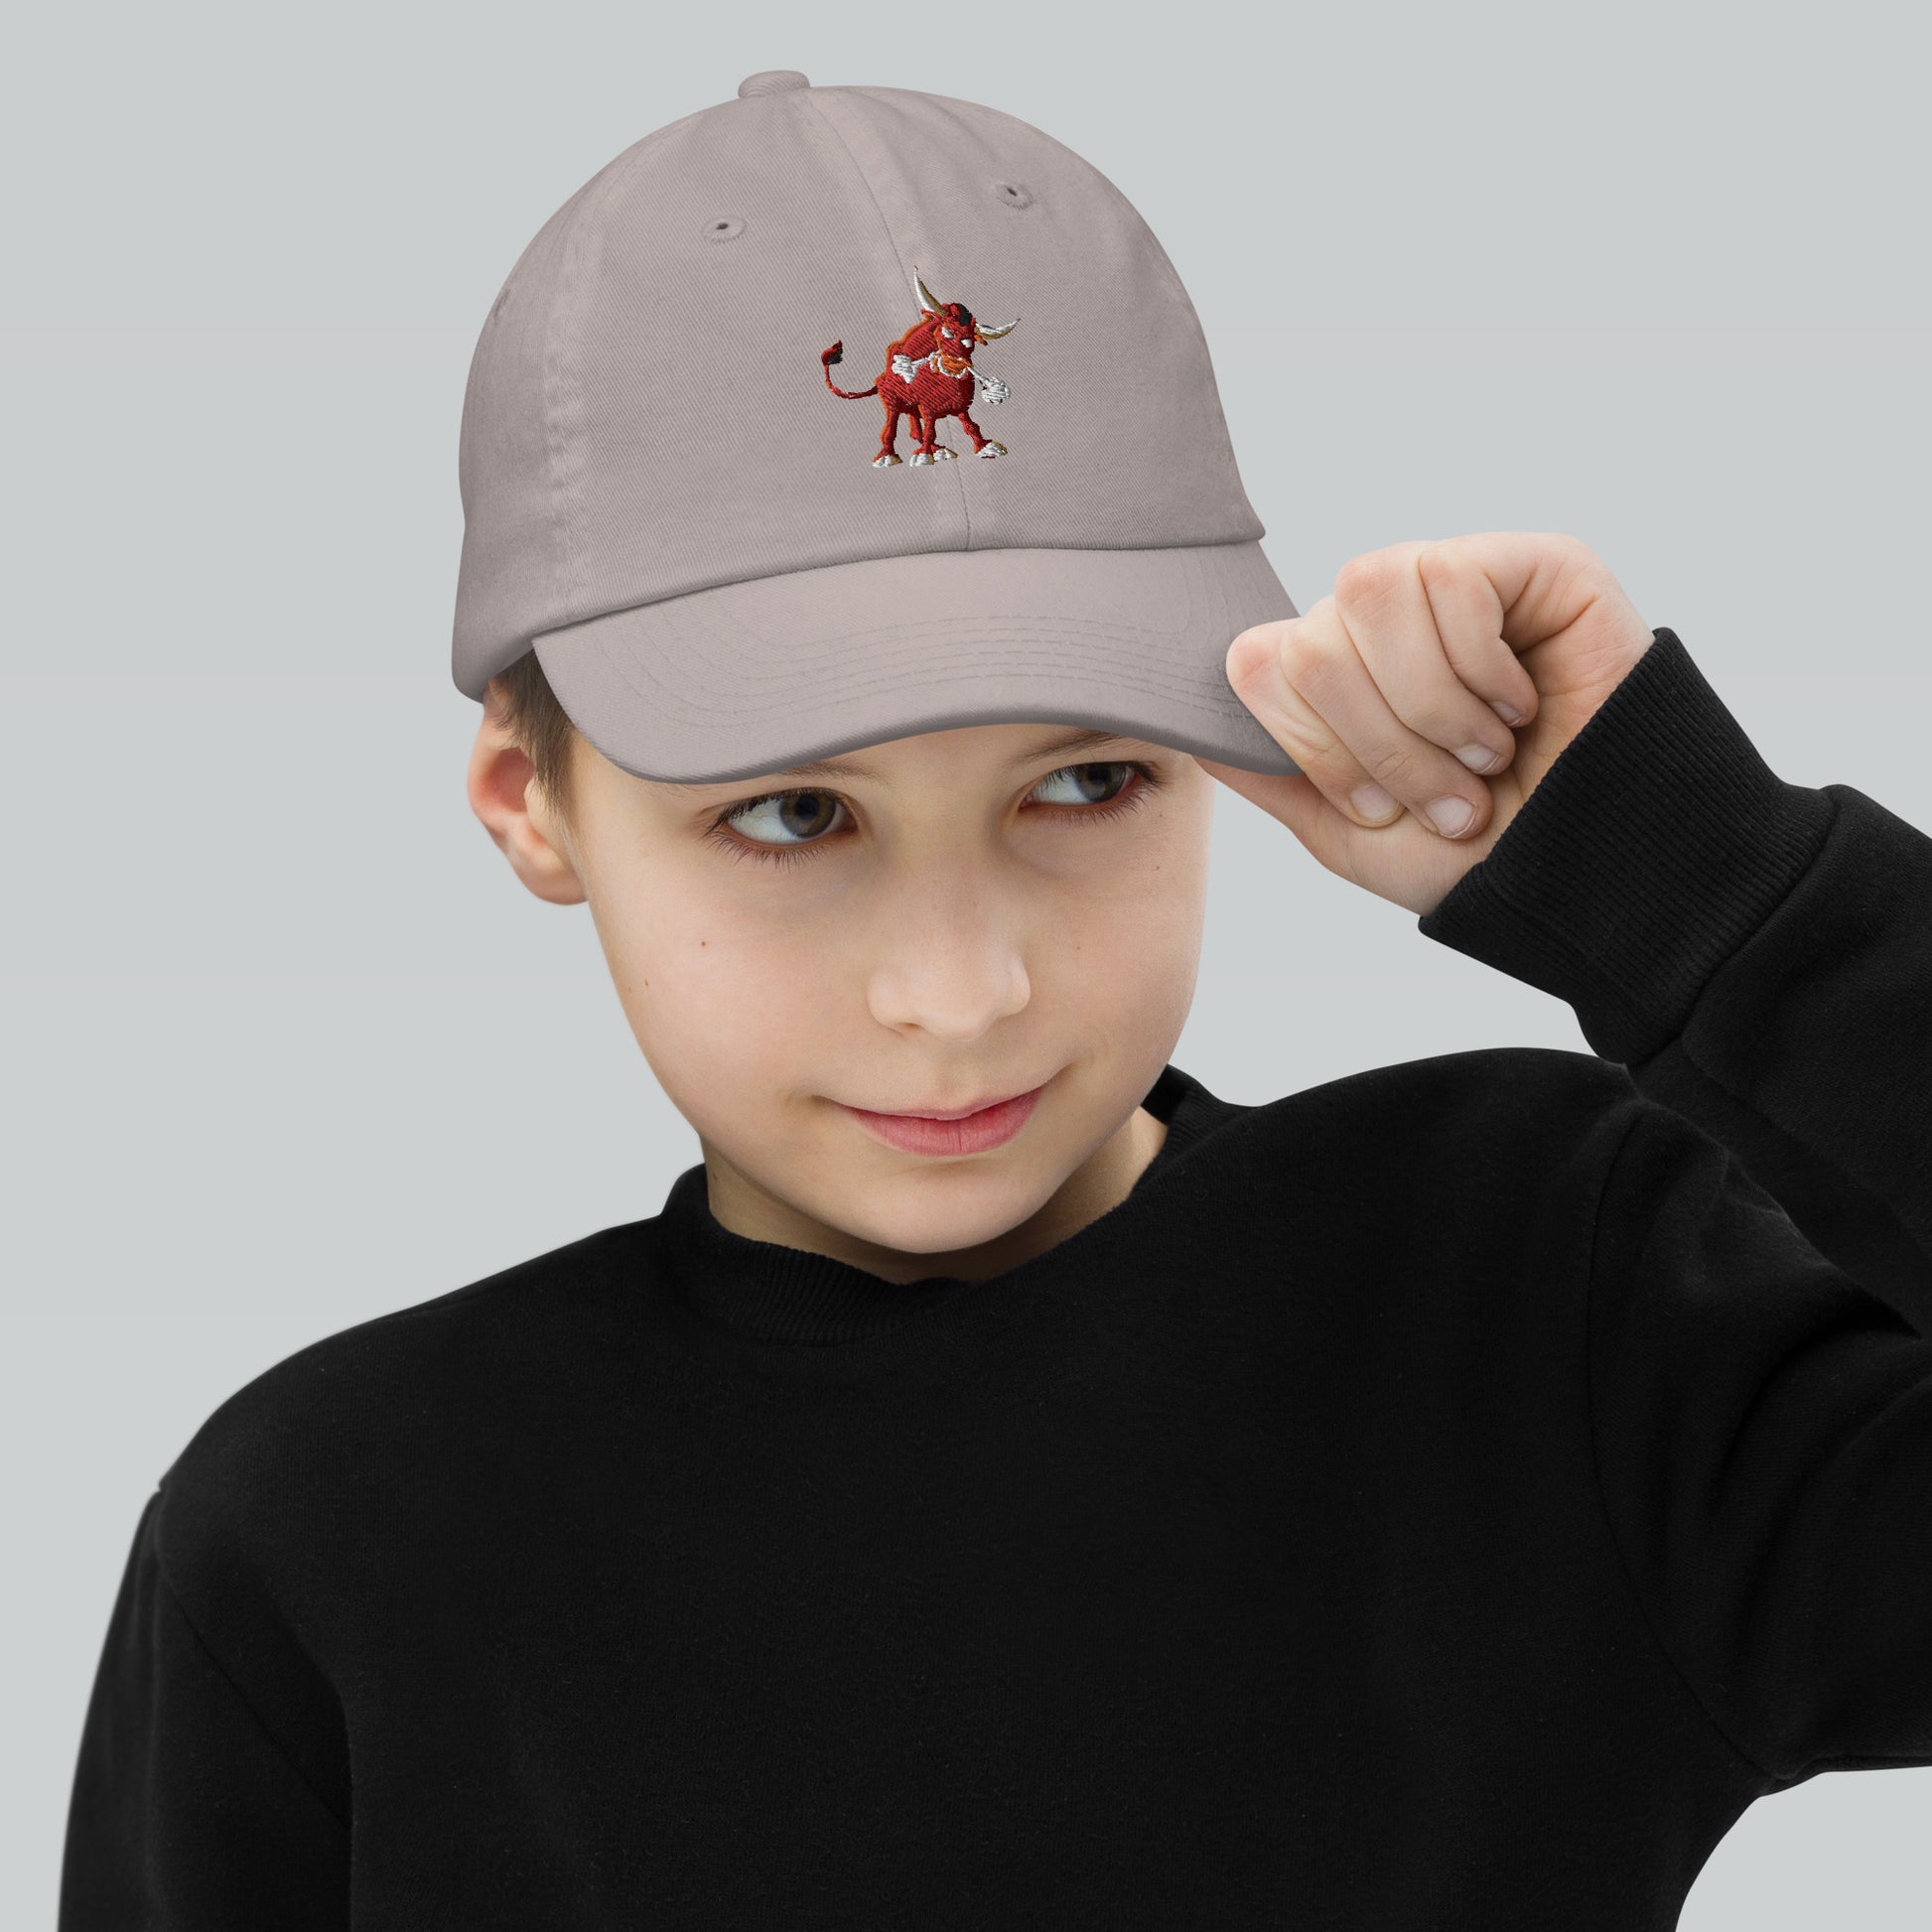 grey kids baseball cap with bull